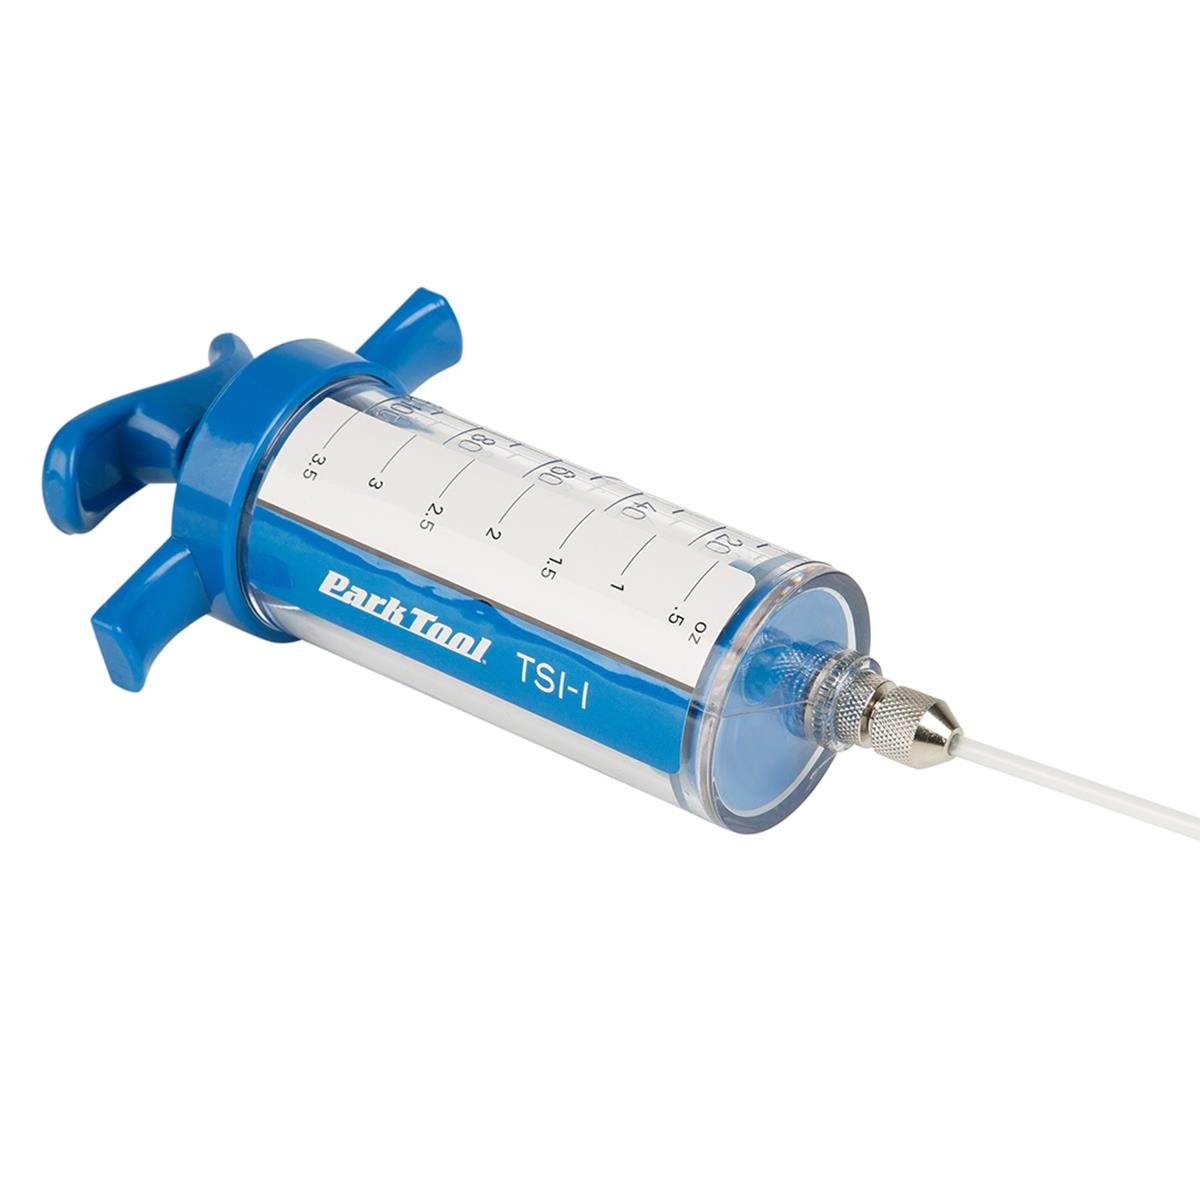 Park Tool Injecteur de mastic pour Tubeless TSI-1 100 ml